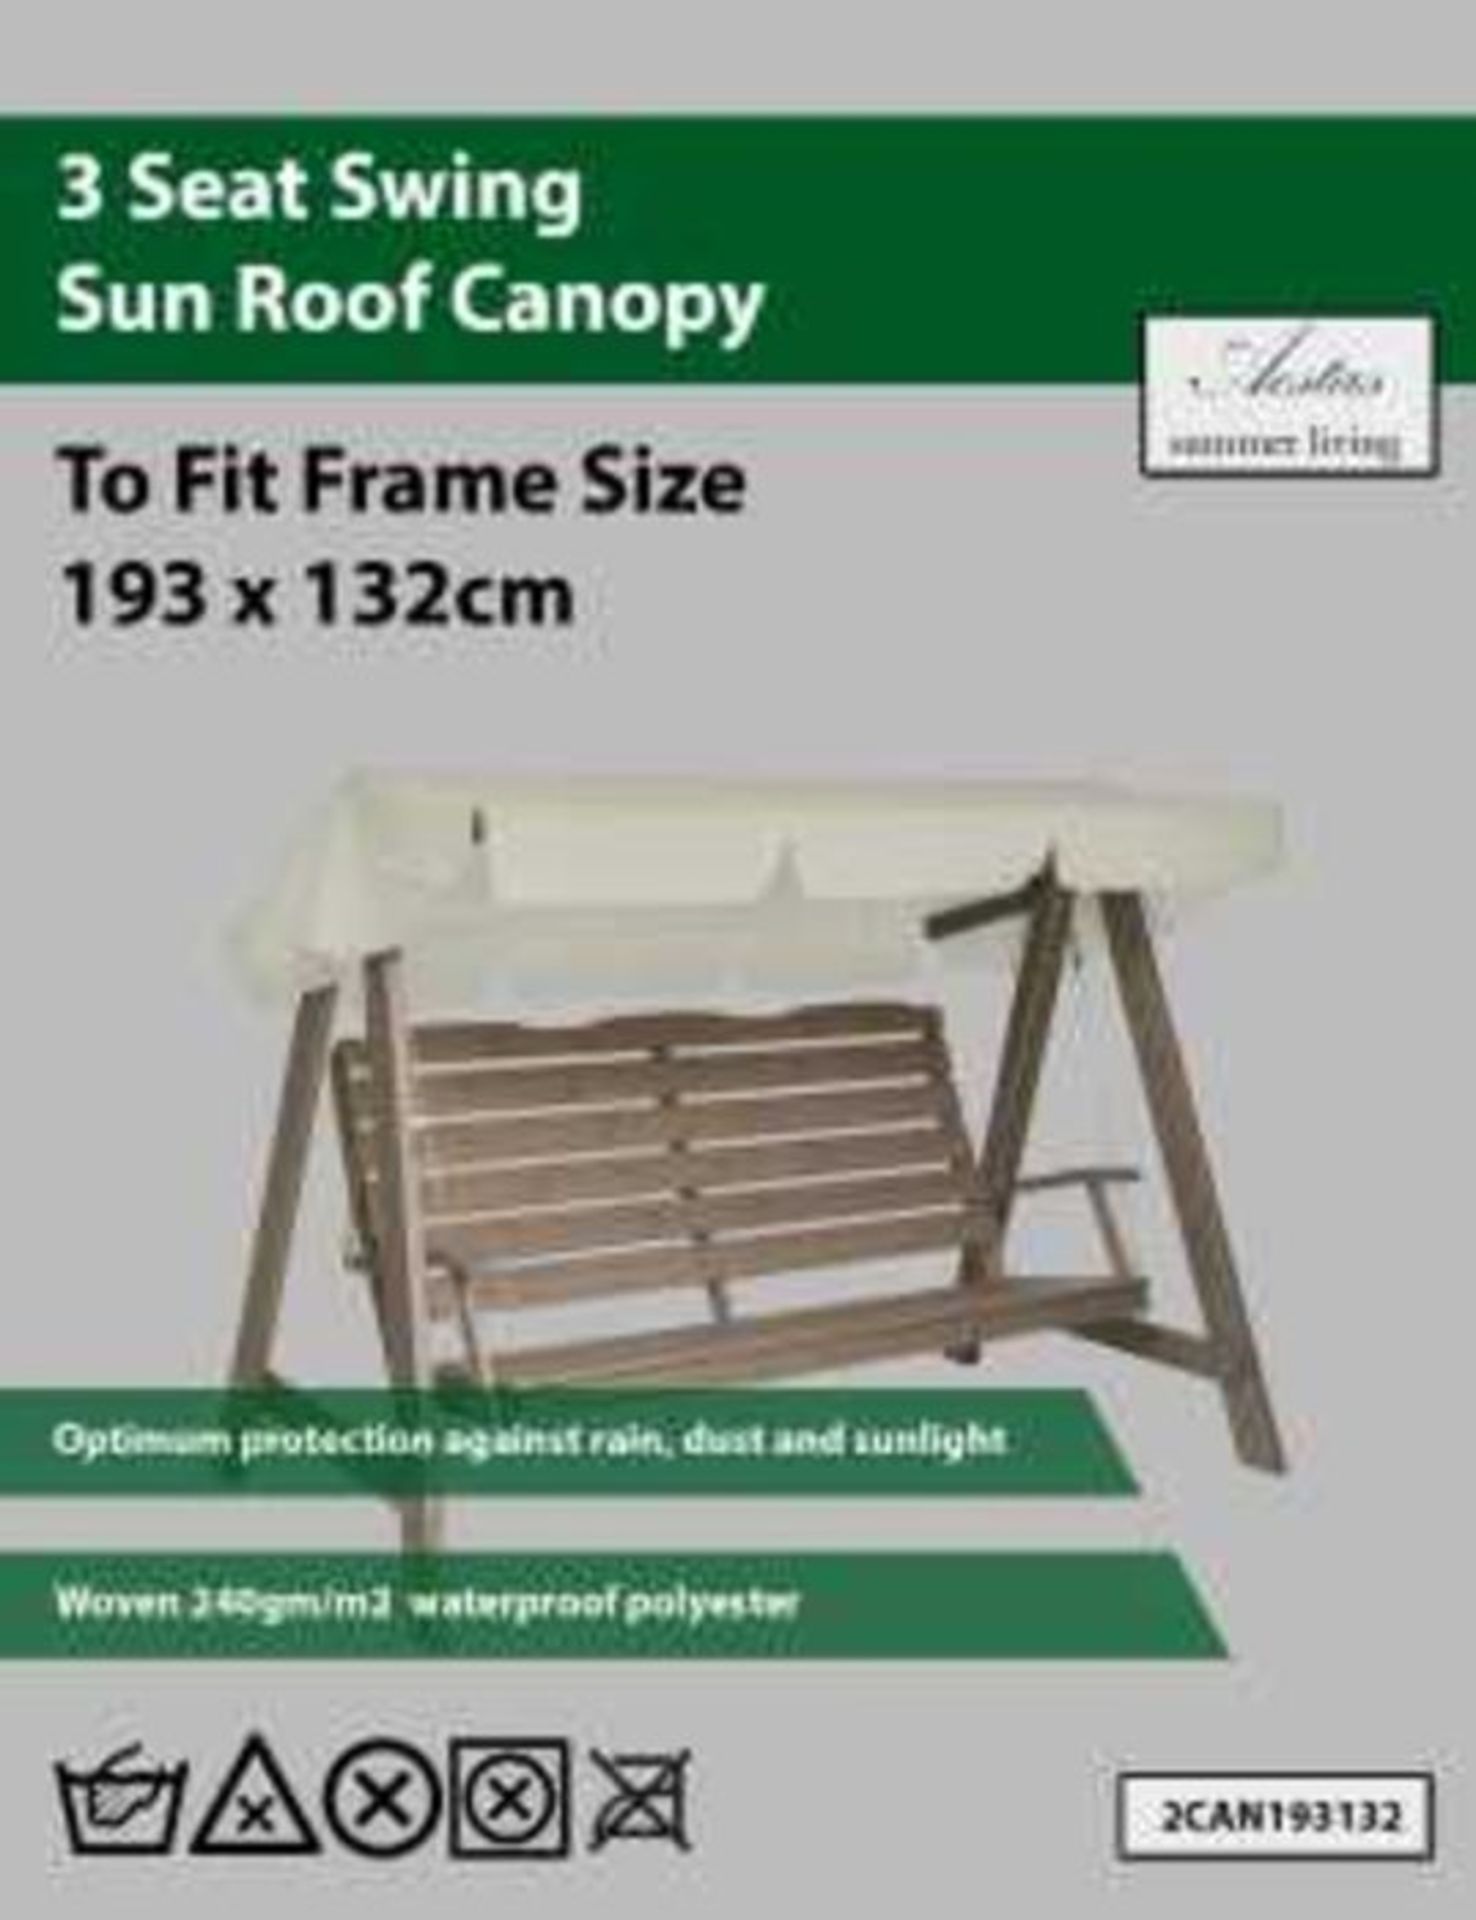 3 Seat Swing Cream Sun Roof Canopy (193cm x 132cm)